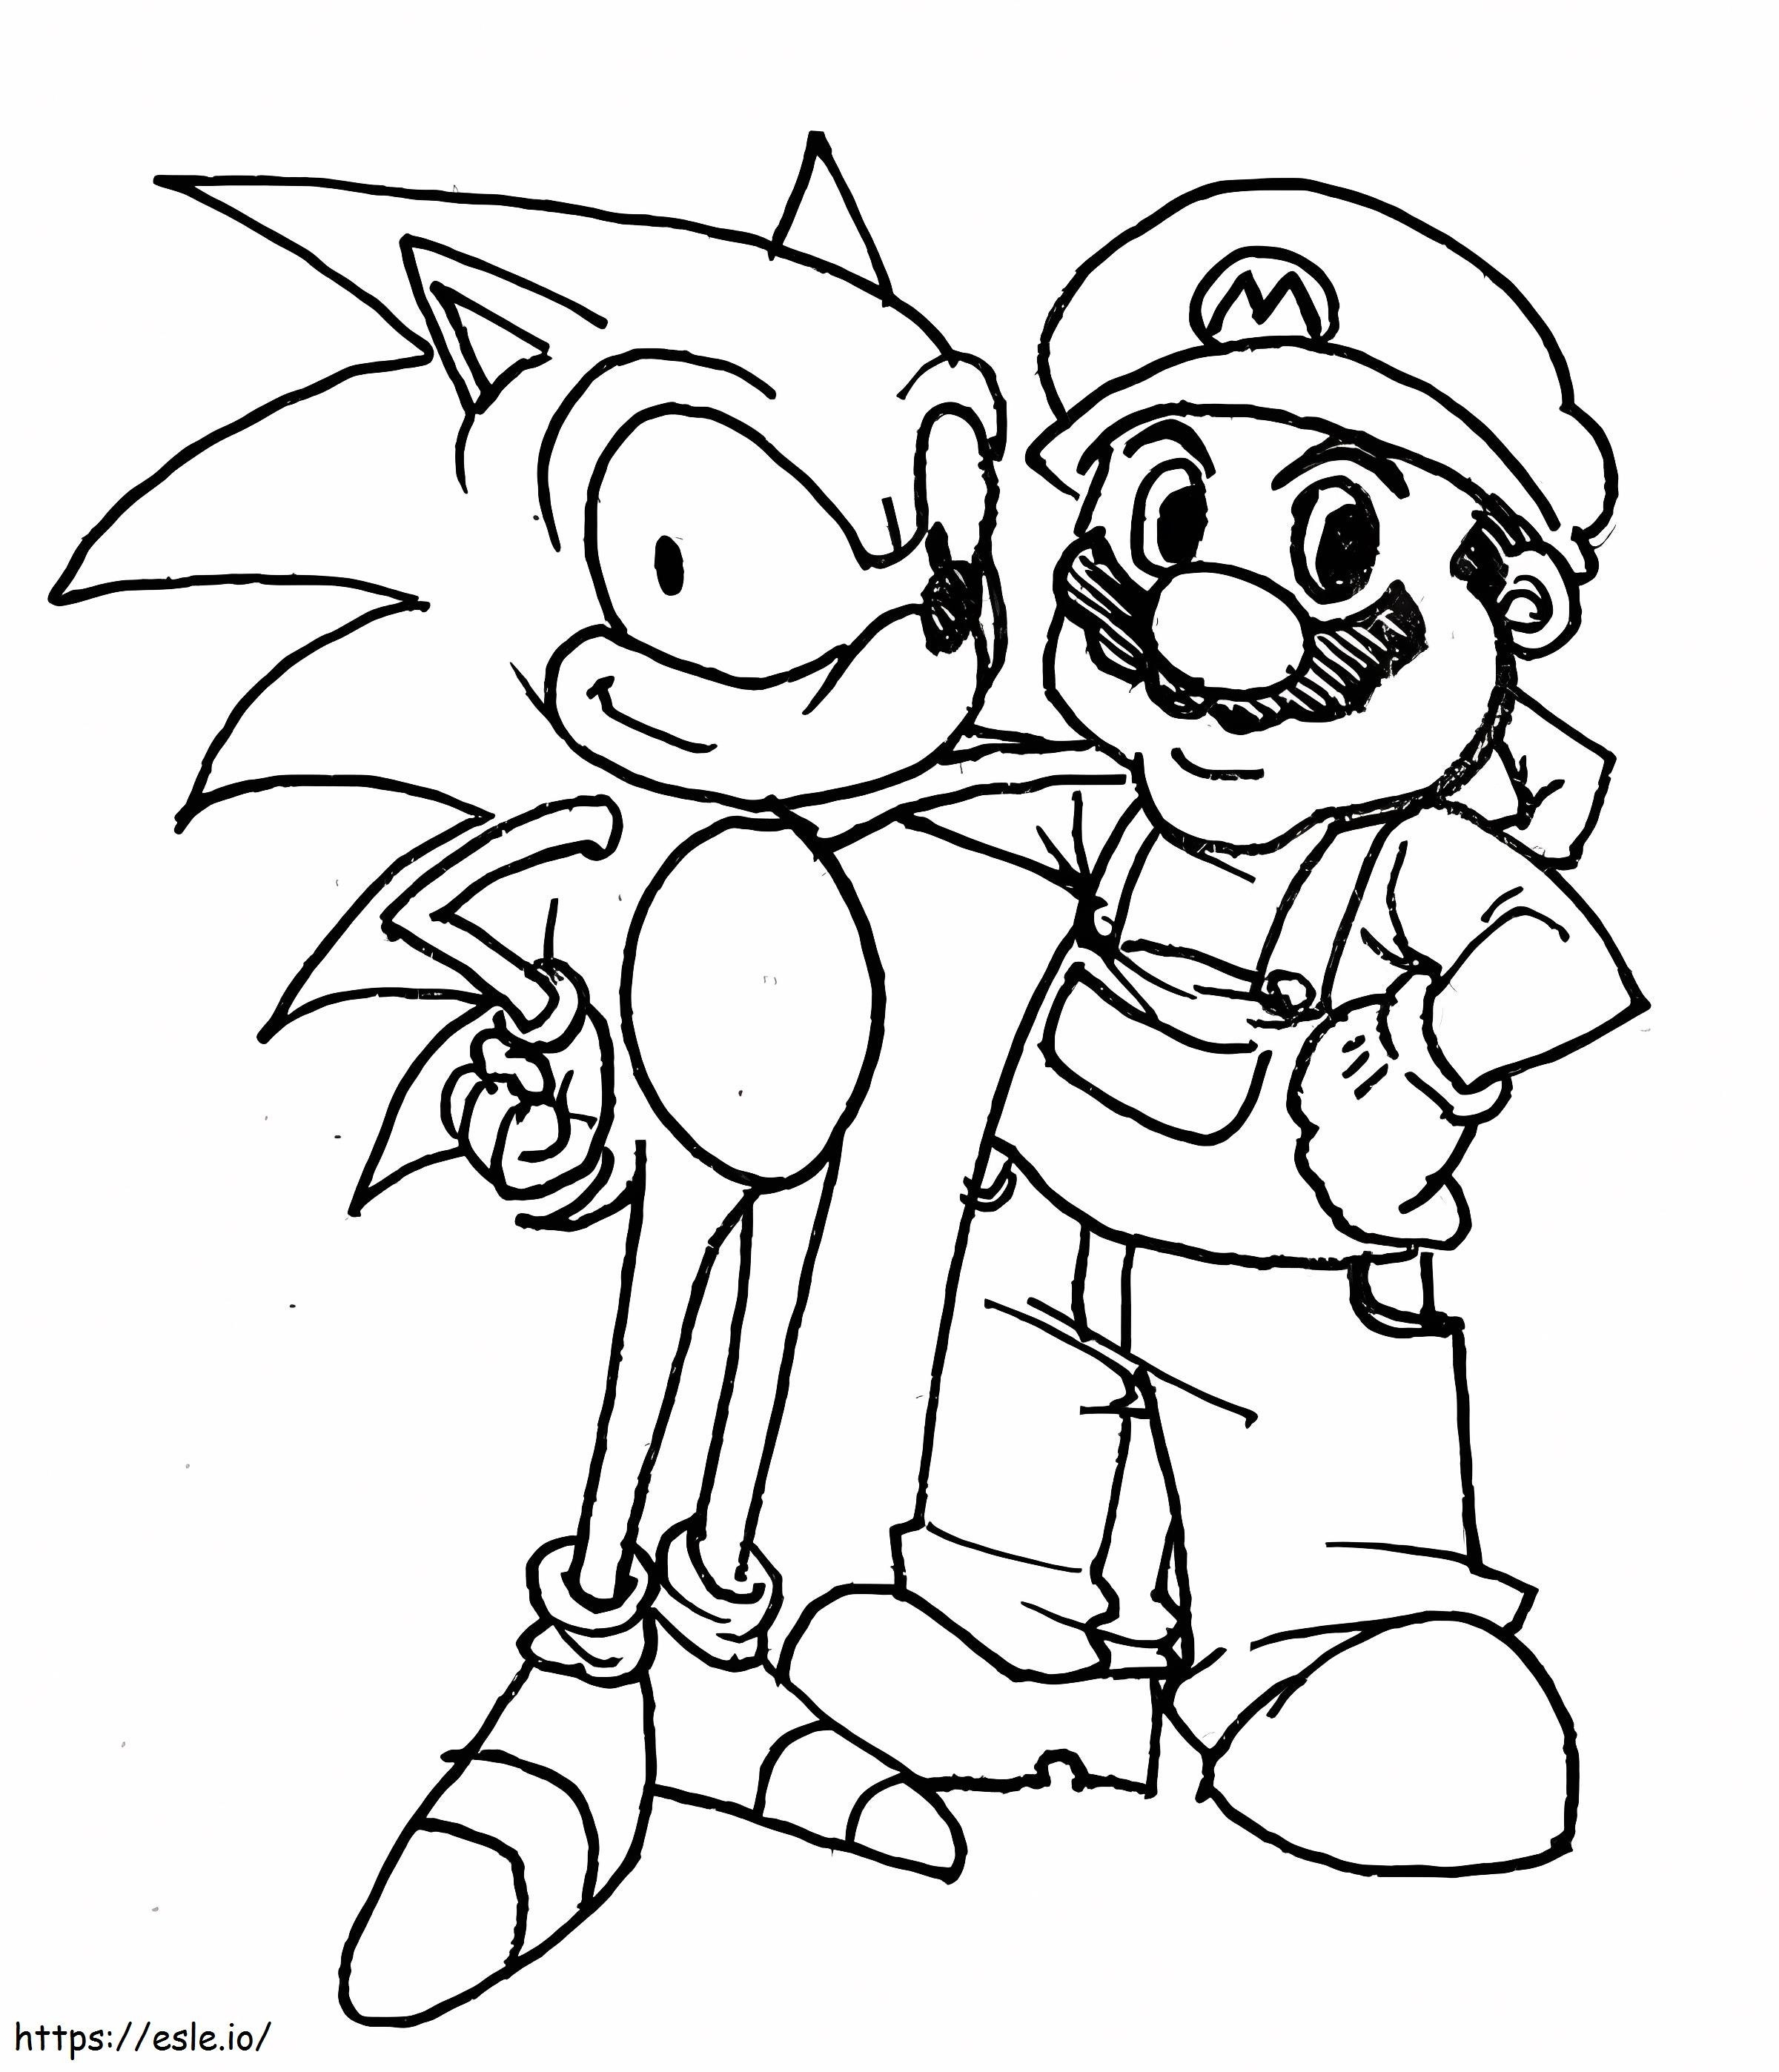 Coloriage Mario avec Sonic à imprimer dessin